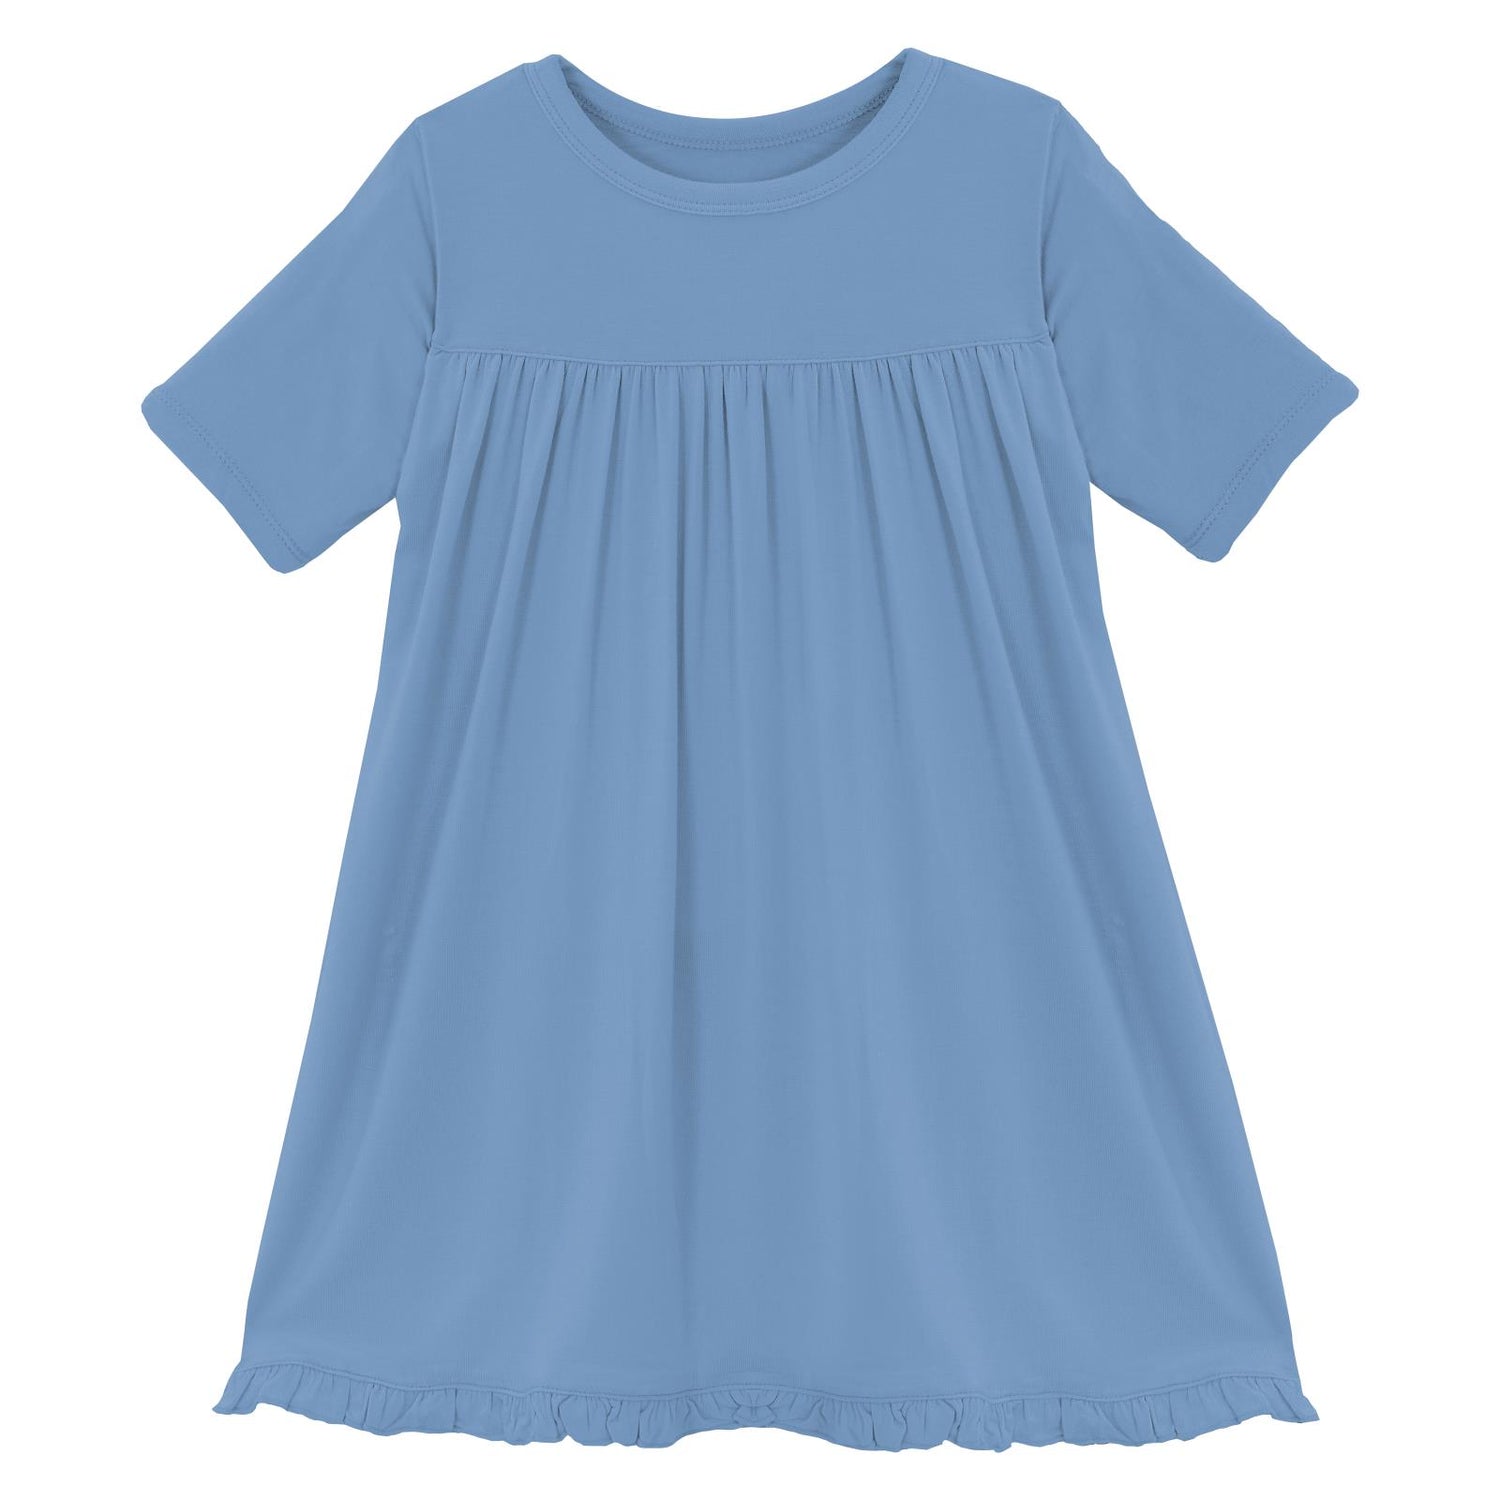 Classic Short Sleeve Swing Dress in Dream Blue